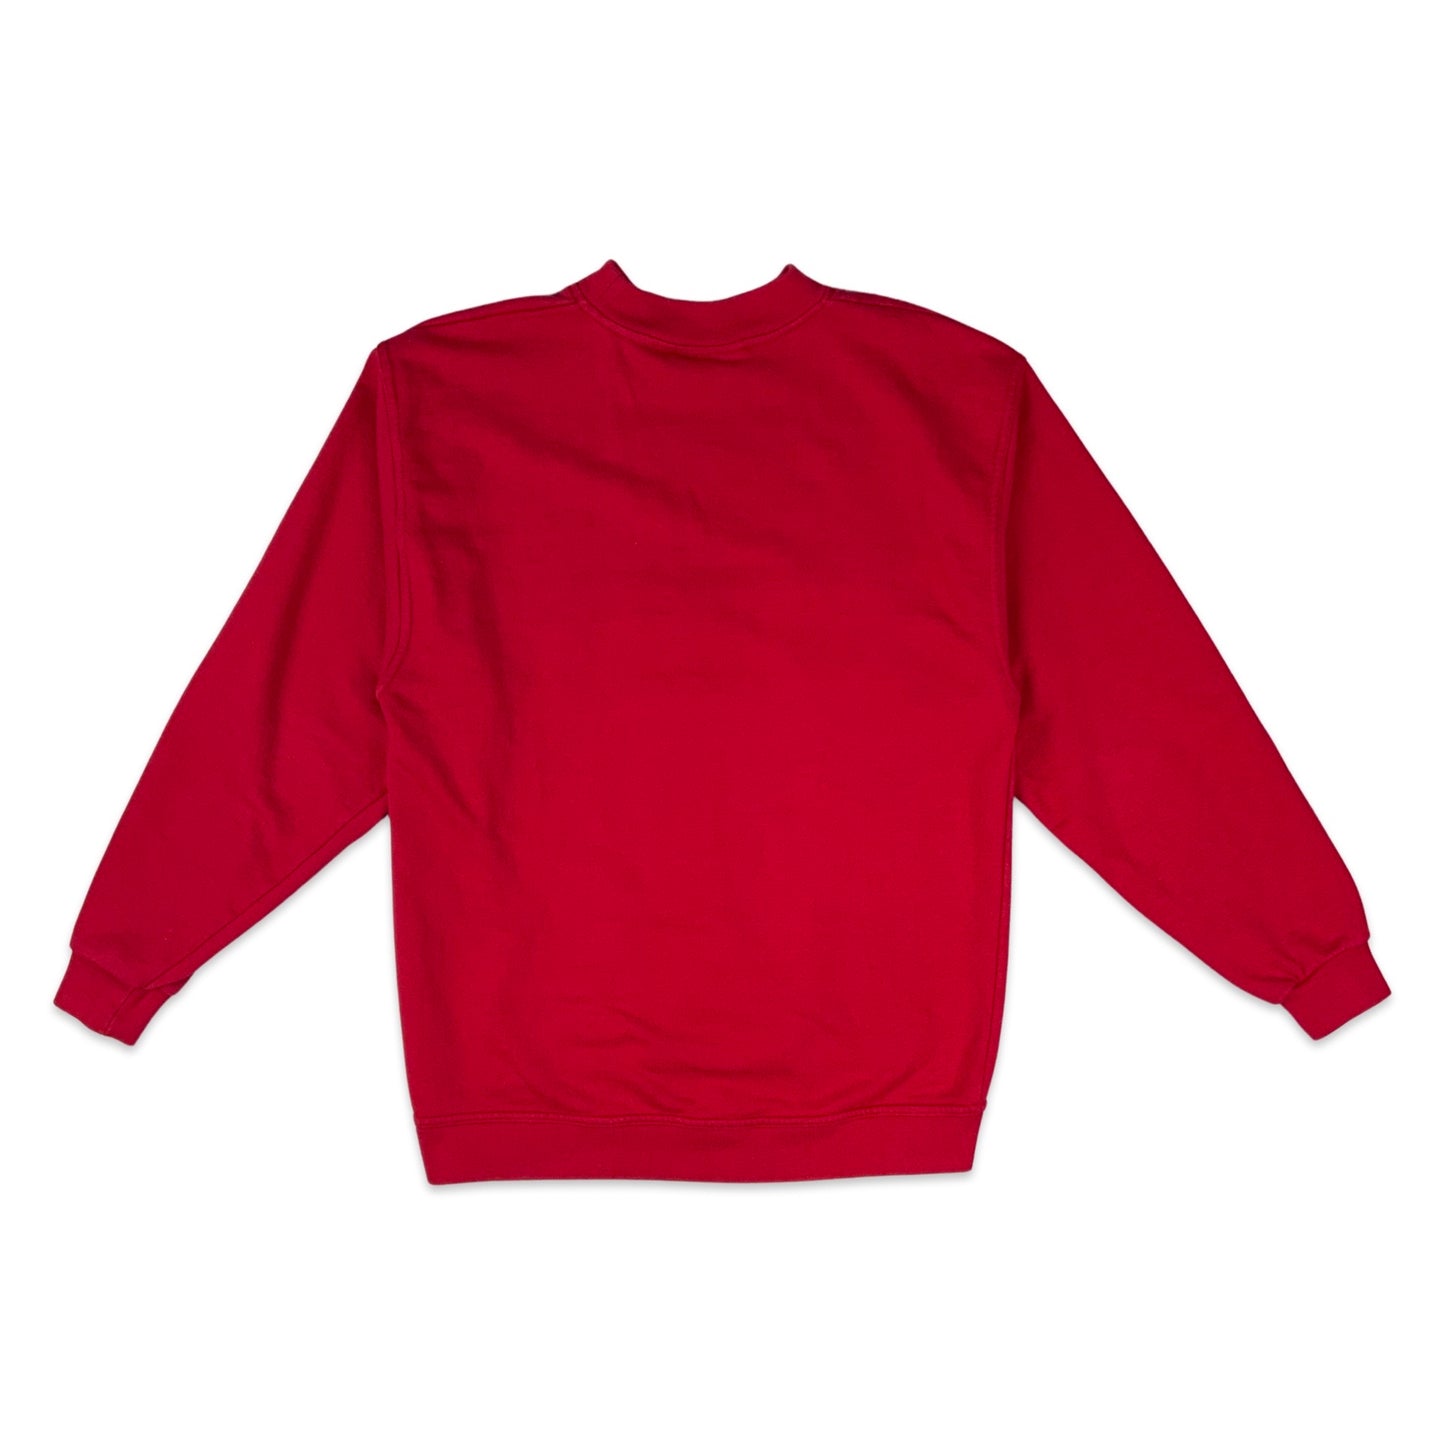 Vintage Red Long Island Novelty Sweatshirt XS S